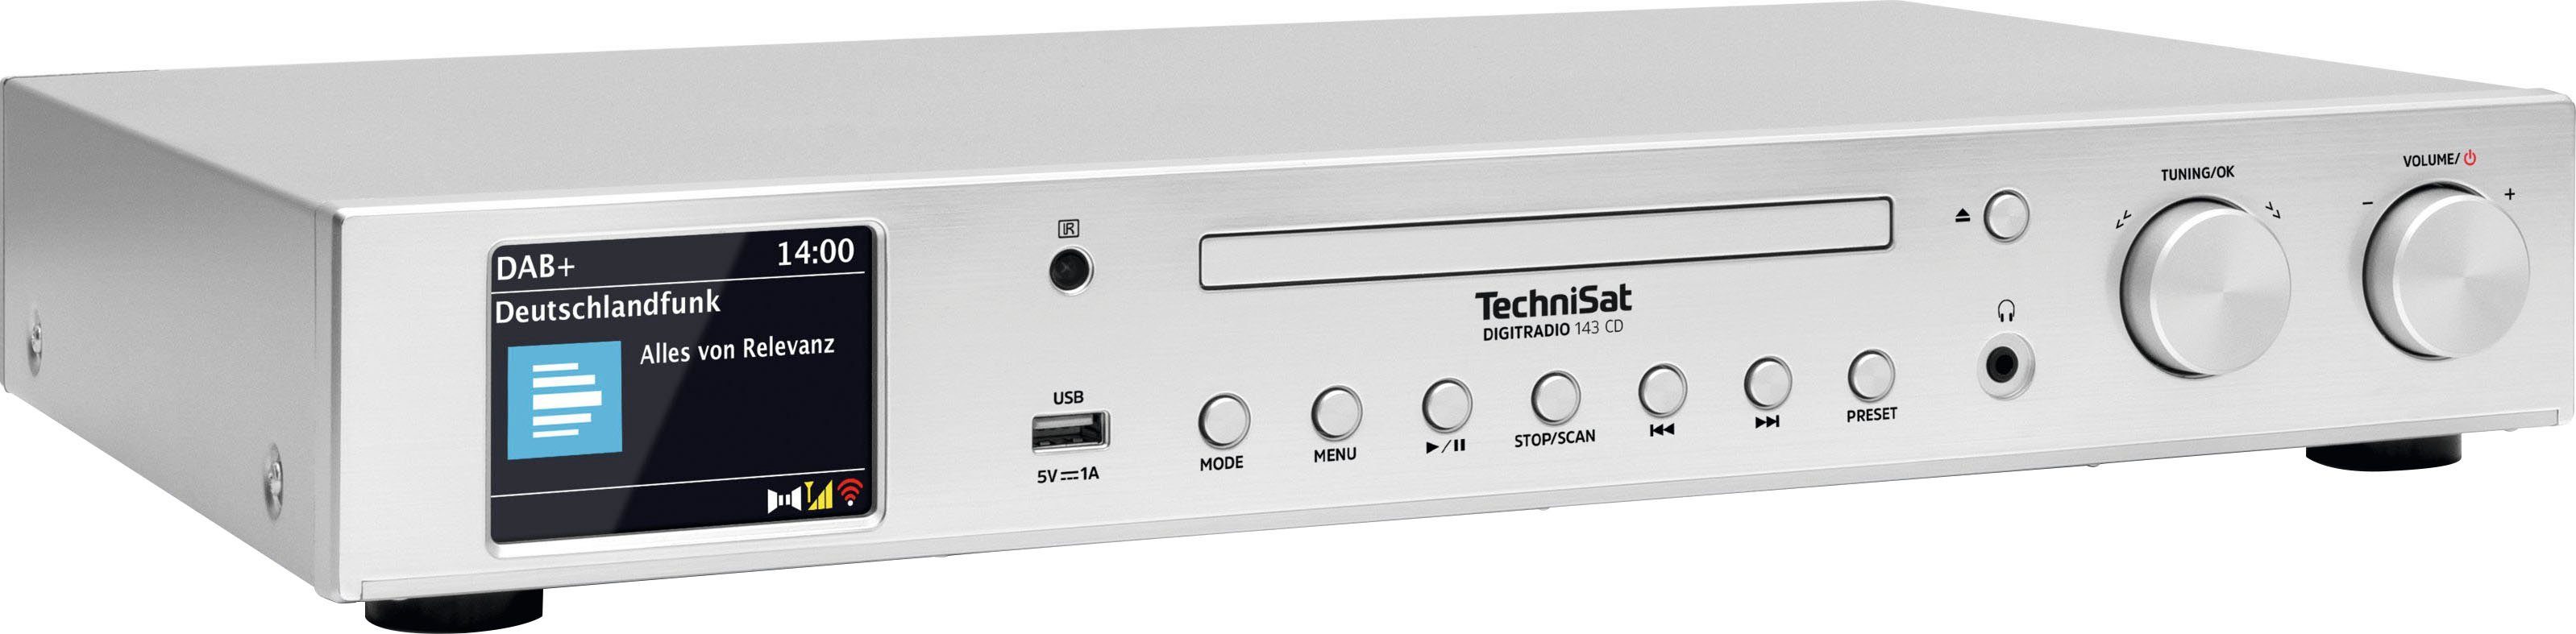 TechniSat (Digitalradio 143 RDS) CD (DAB), silber mit UKW DIGITRADIO Internetradio, (DAB) (V3) Digitalradio